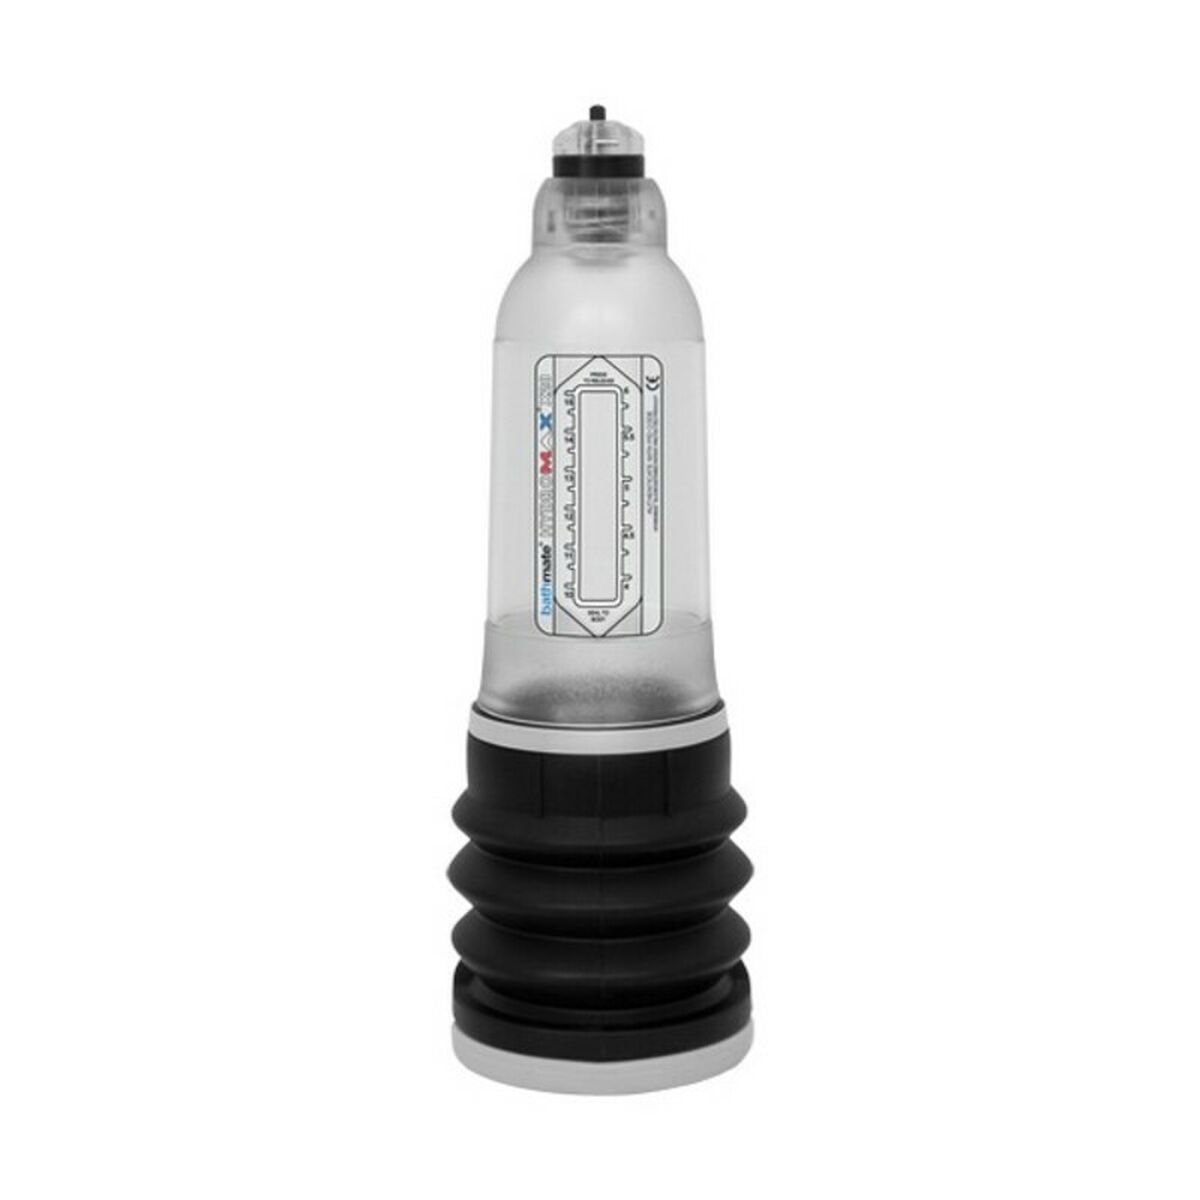 Pompa per Pene Hydromax X20 Trasparente Bathmate HM-20-CC